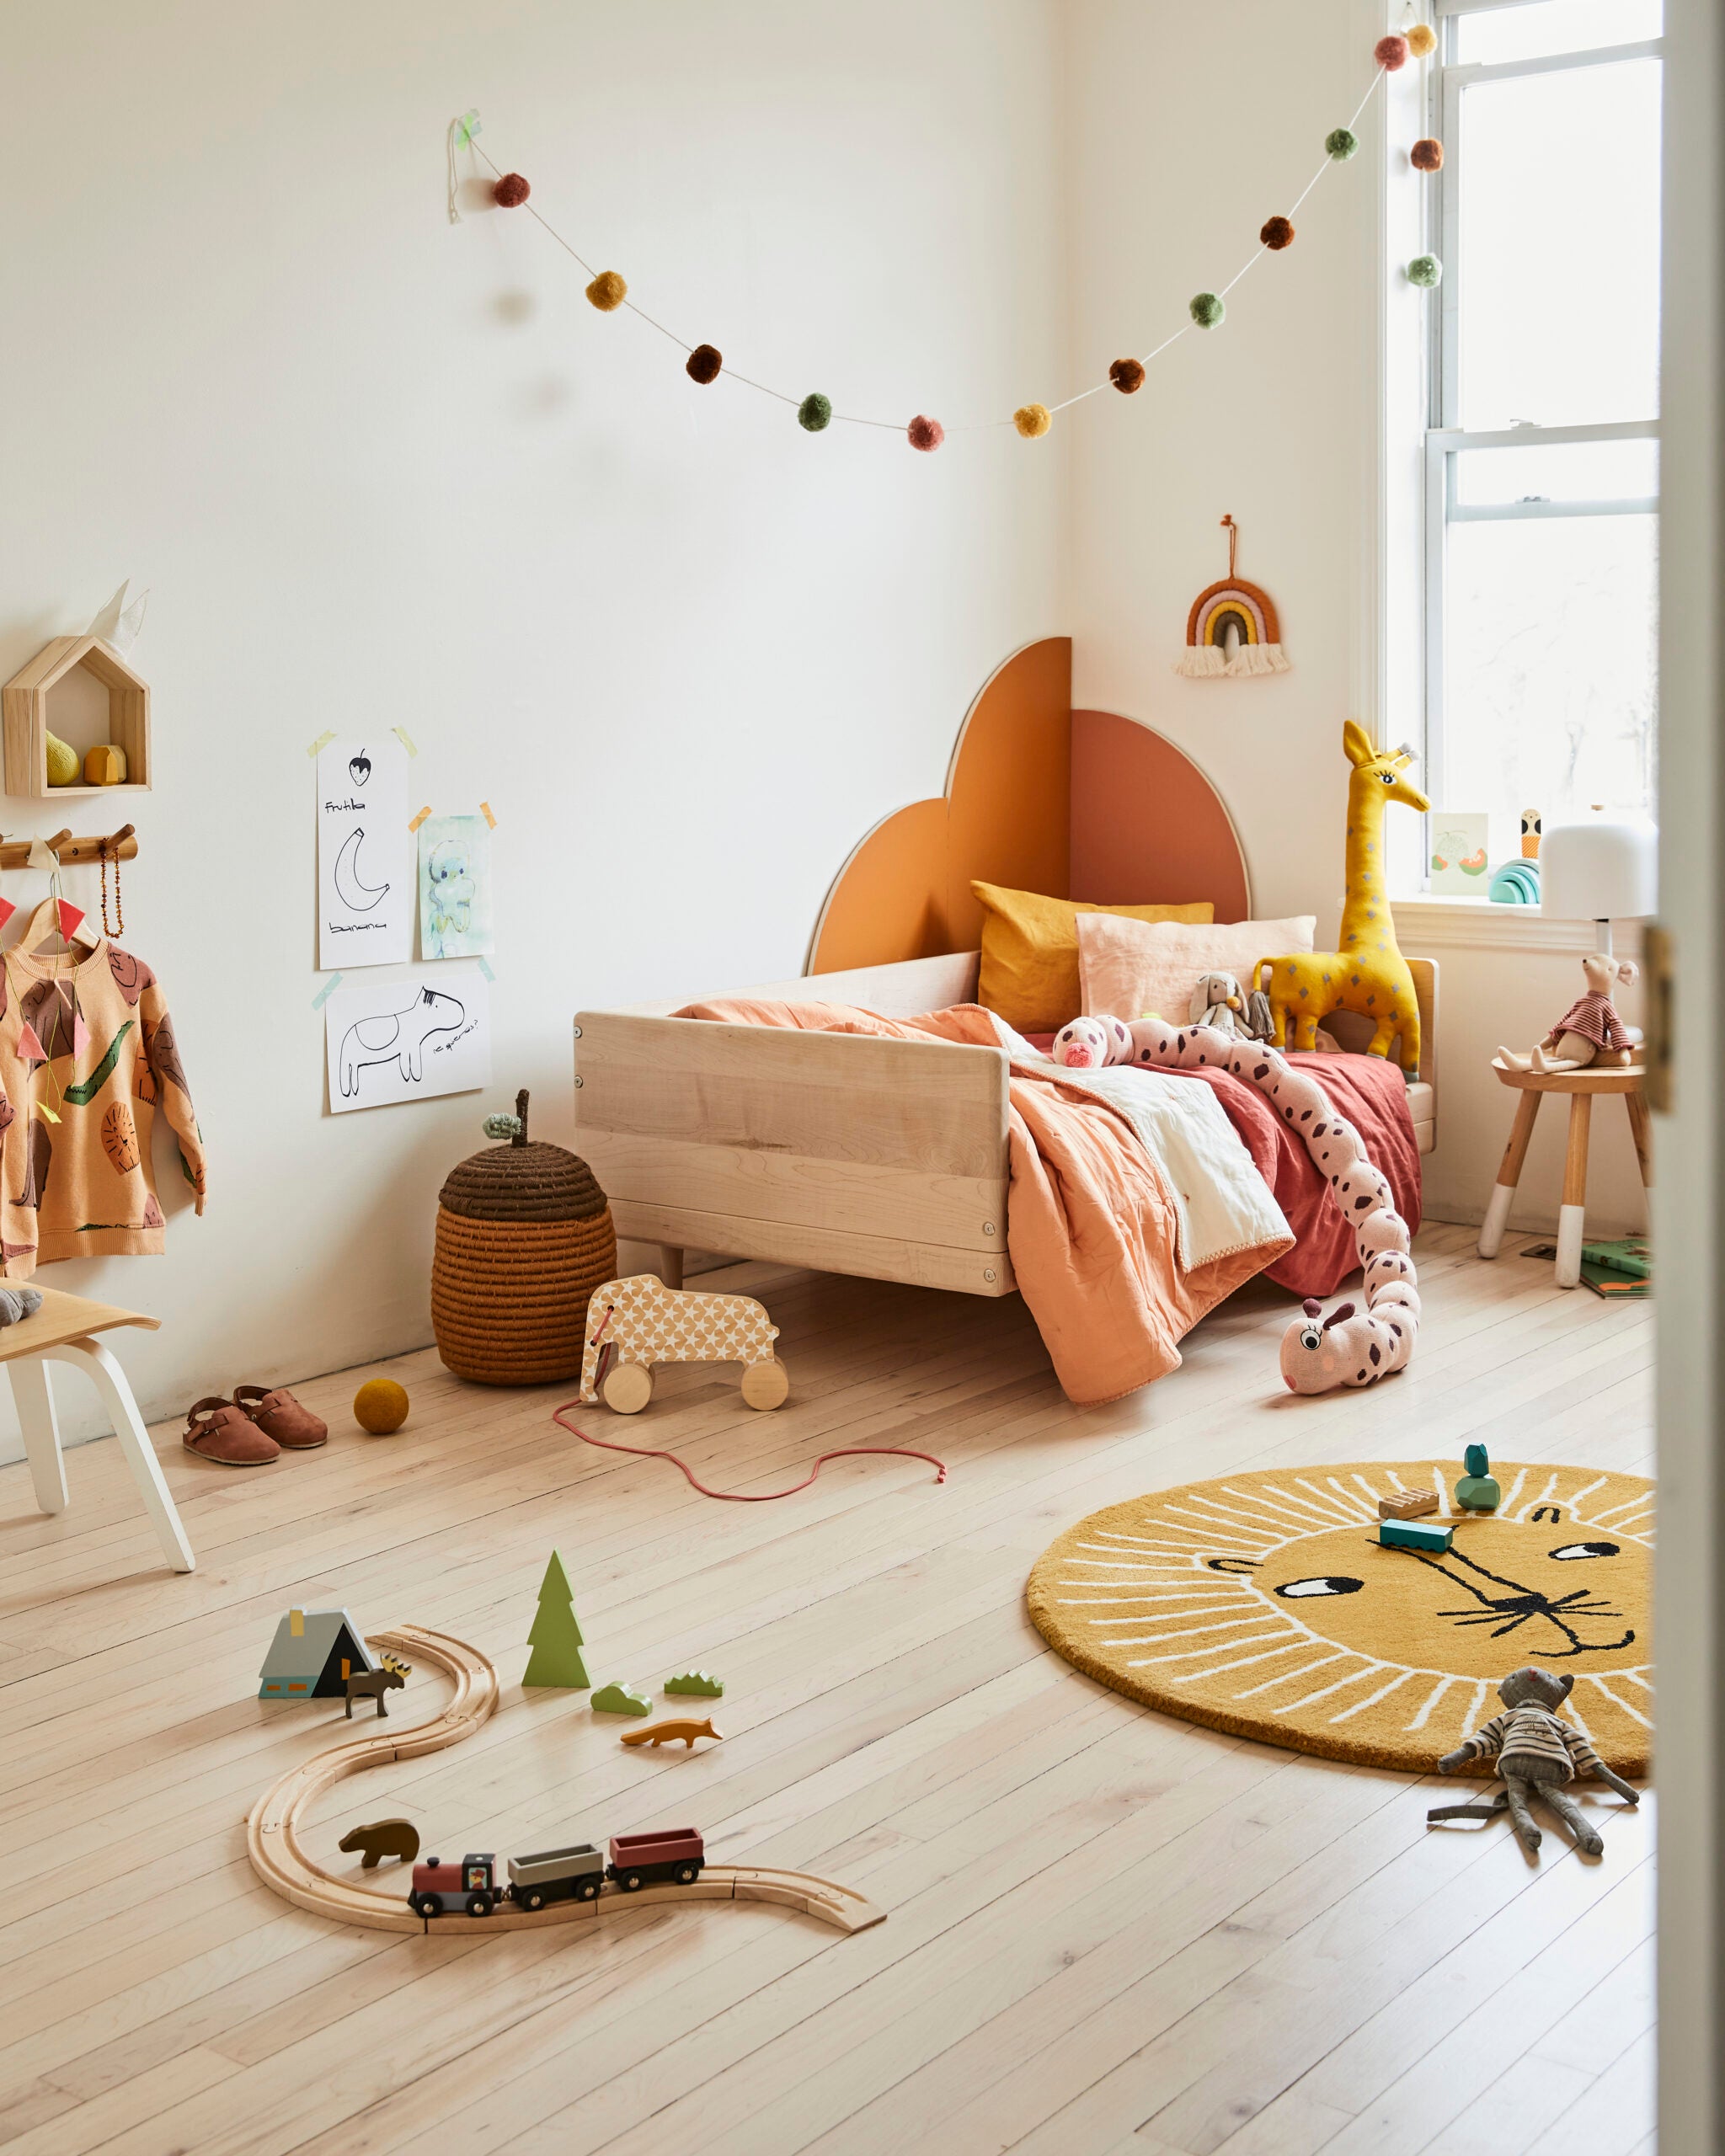 kidâs room with orange arches behind bed and toys on floor